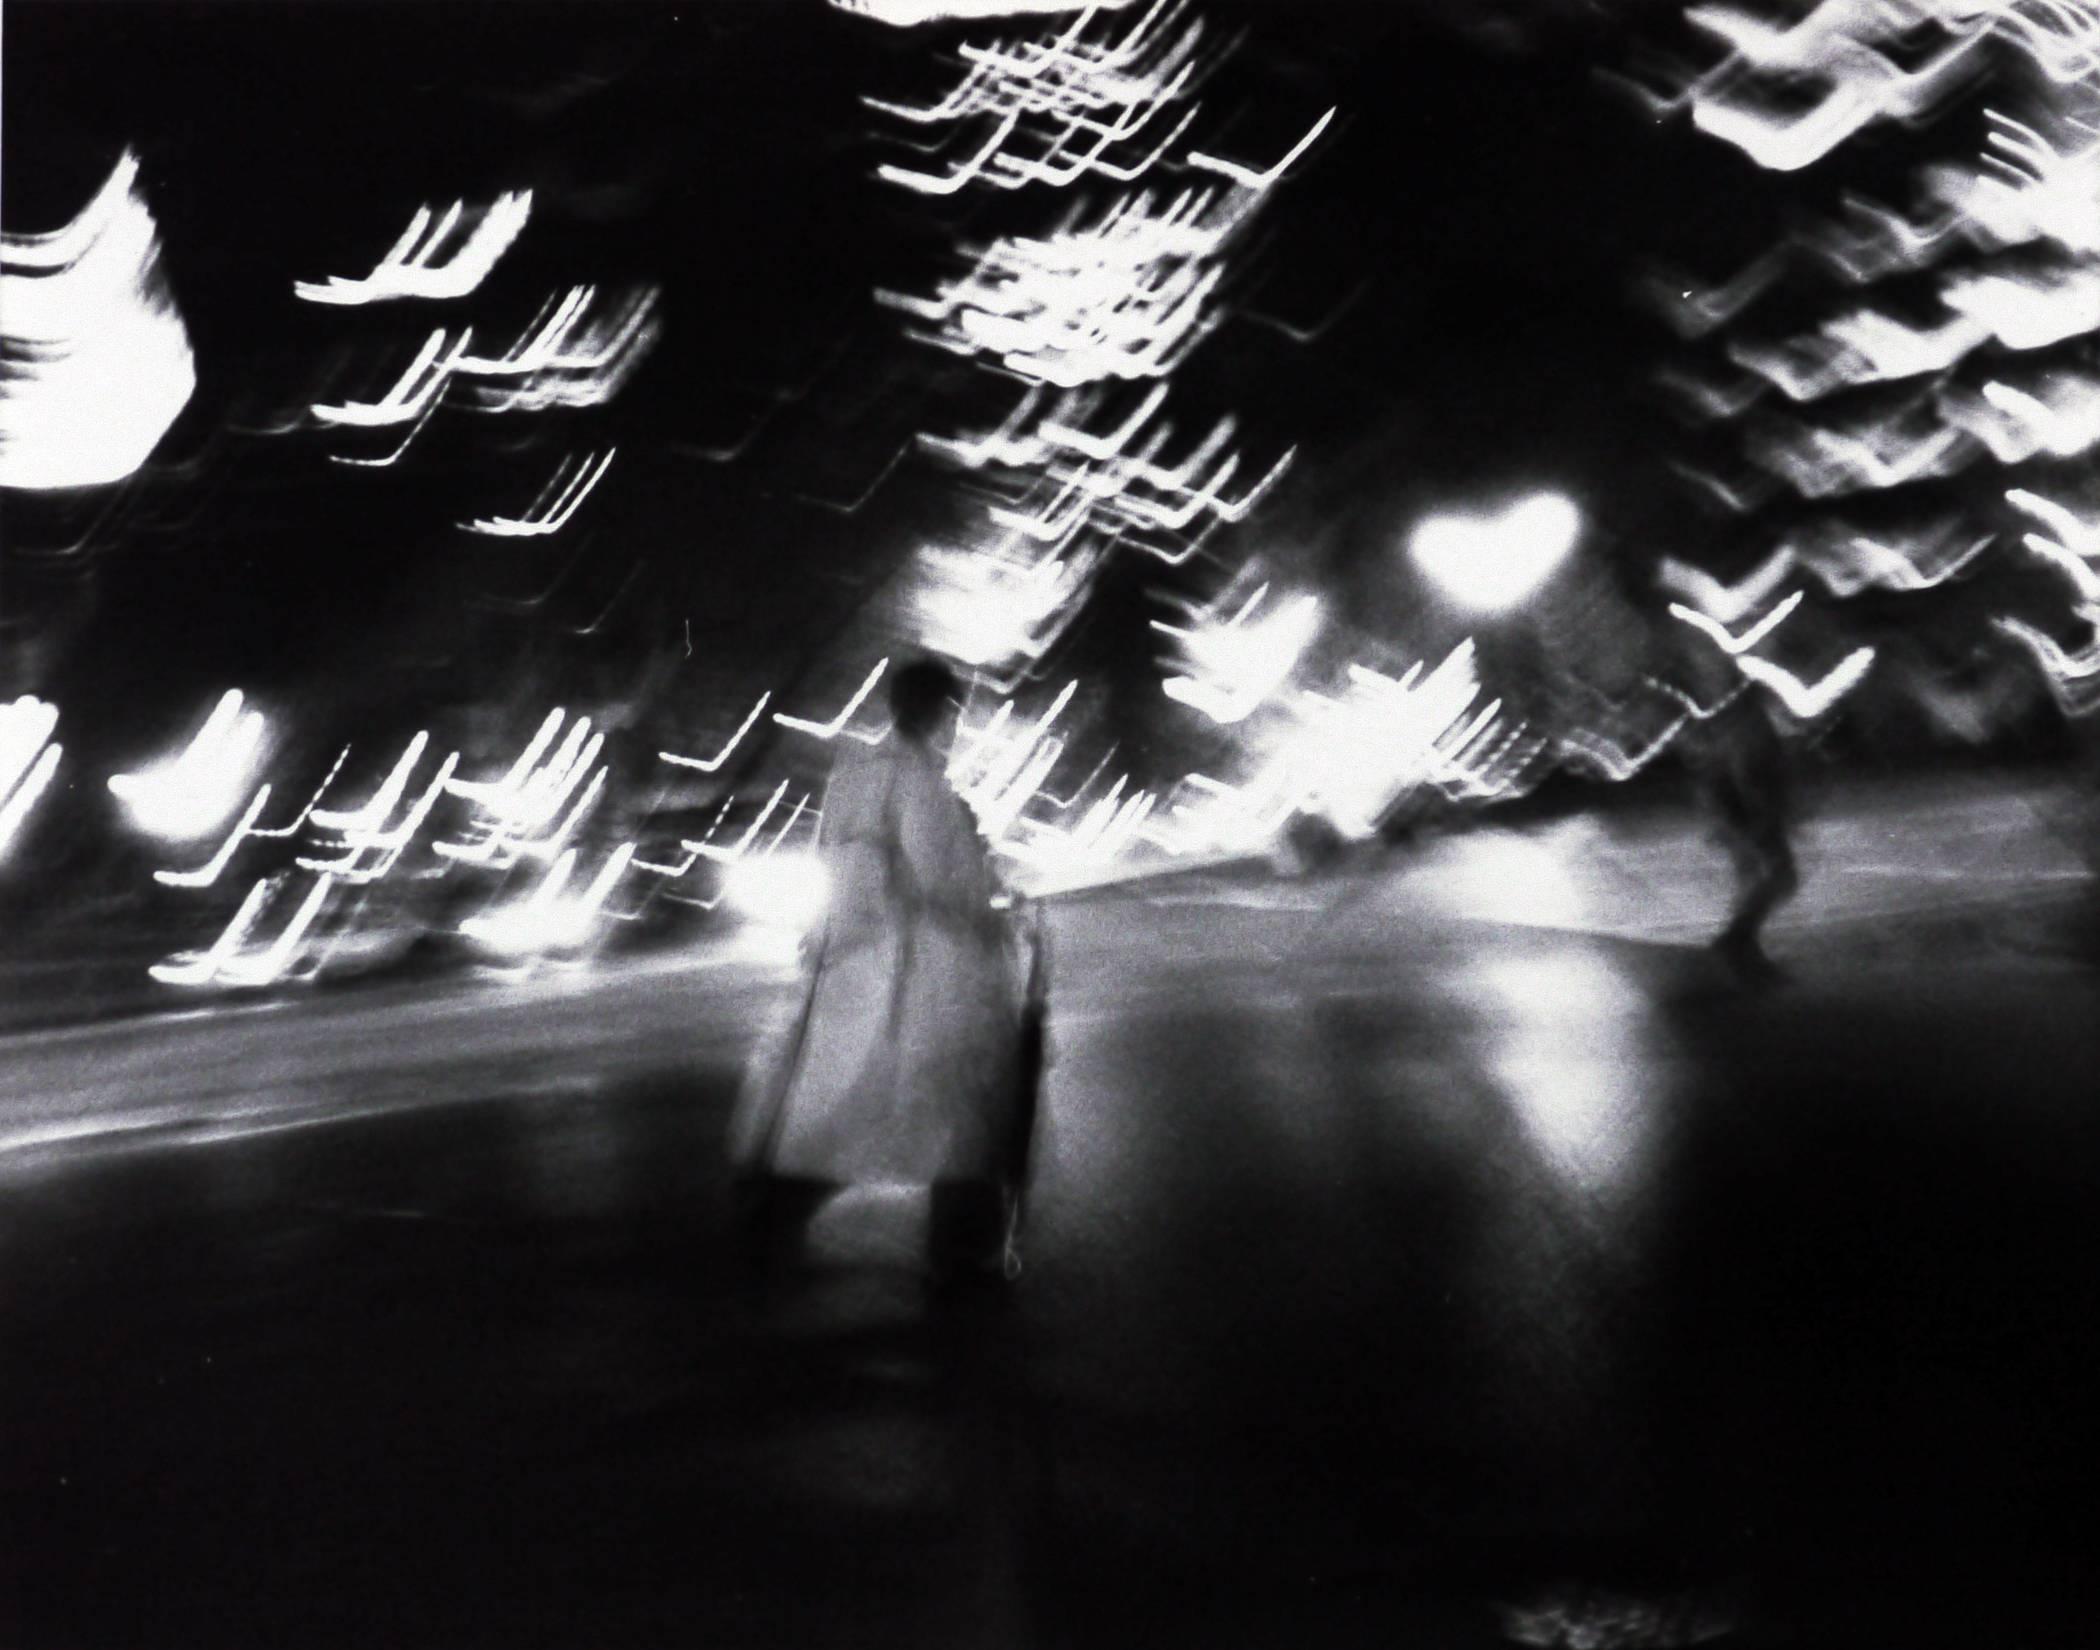 Fernando Natalici Black and White Photograph - 'Blurry Reality' vintage Manhattan photograph